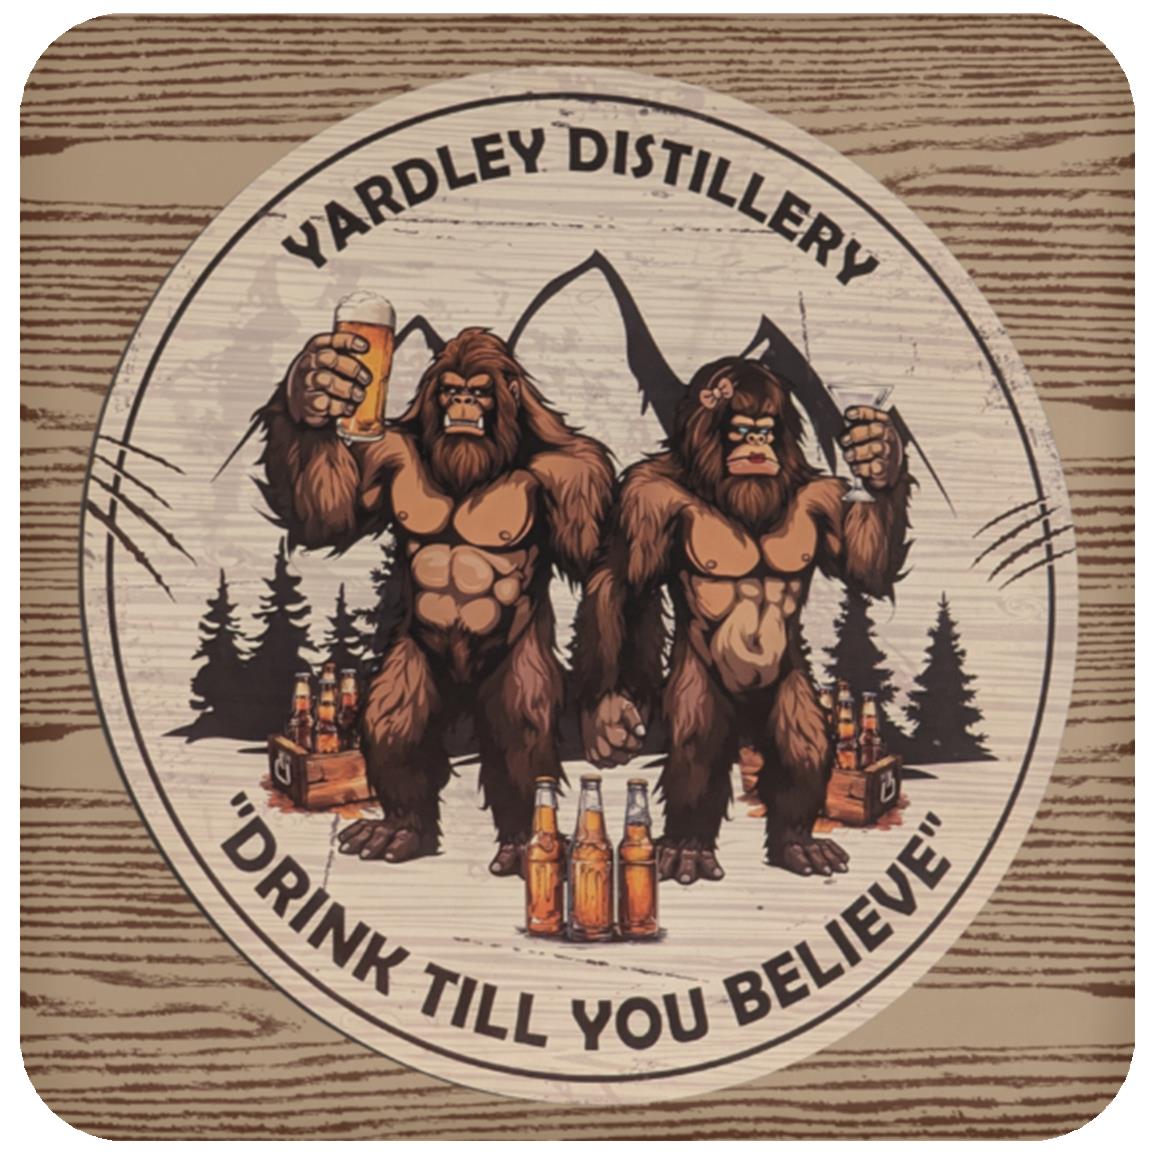 Yardley Distillery Drink Till You Believe Coasters